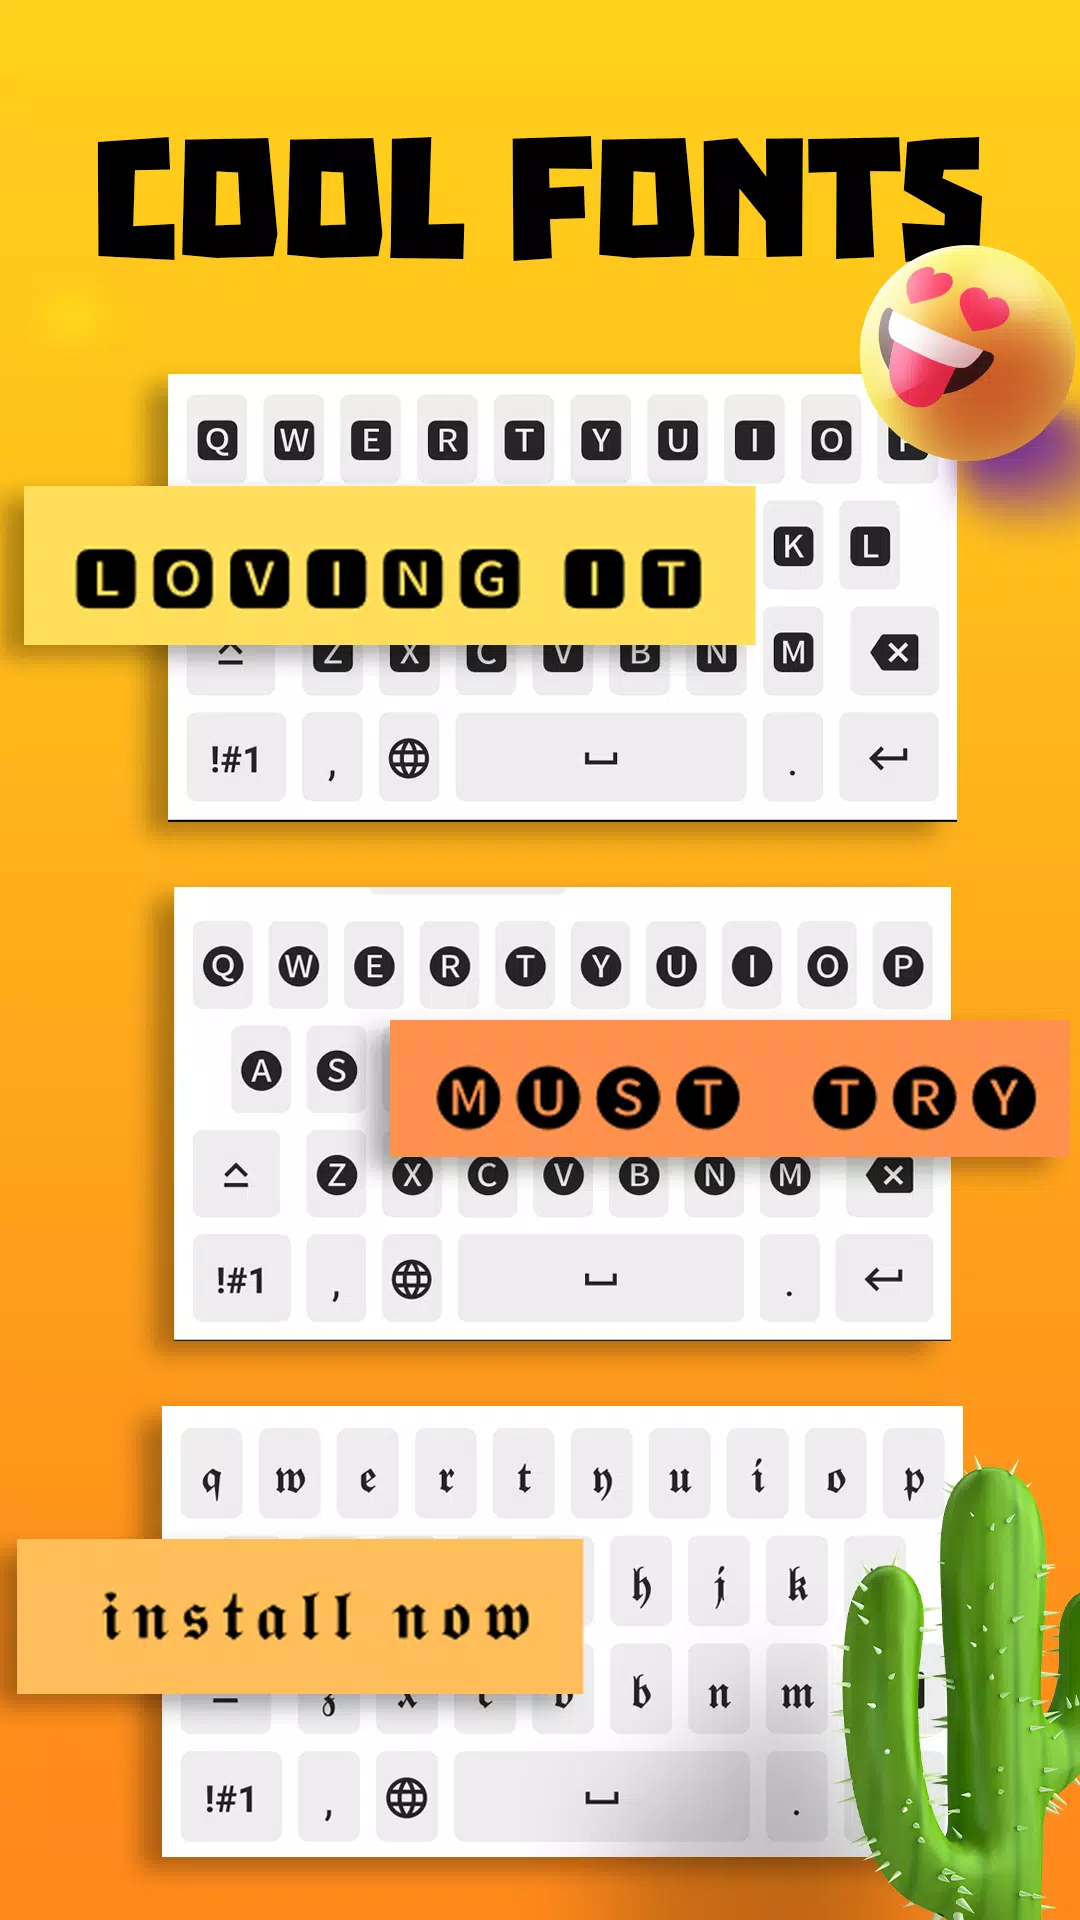 Stylish Fonts Keyboard - Apps on Google Play